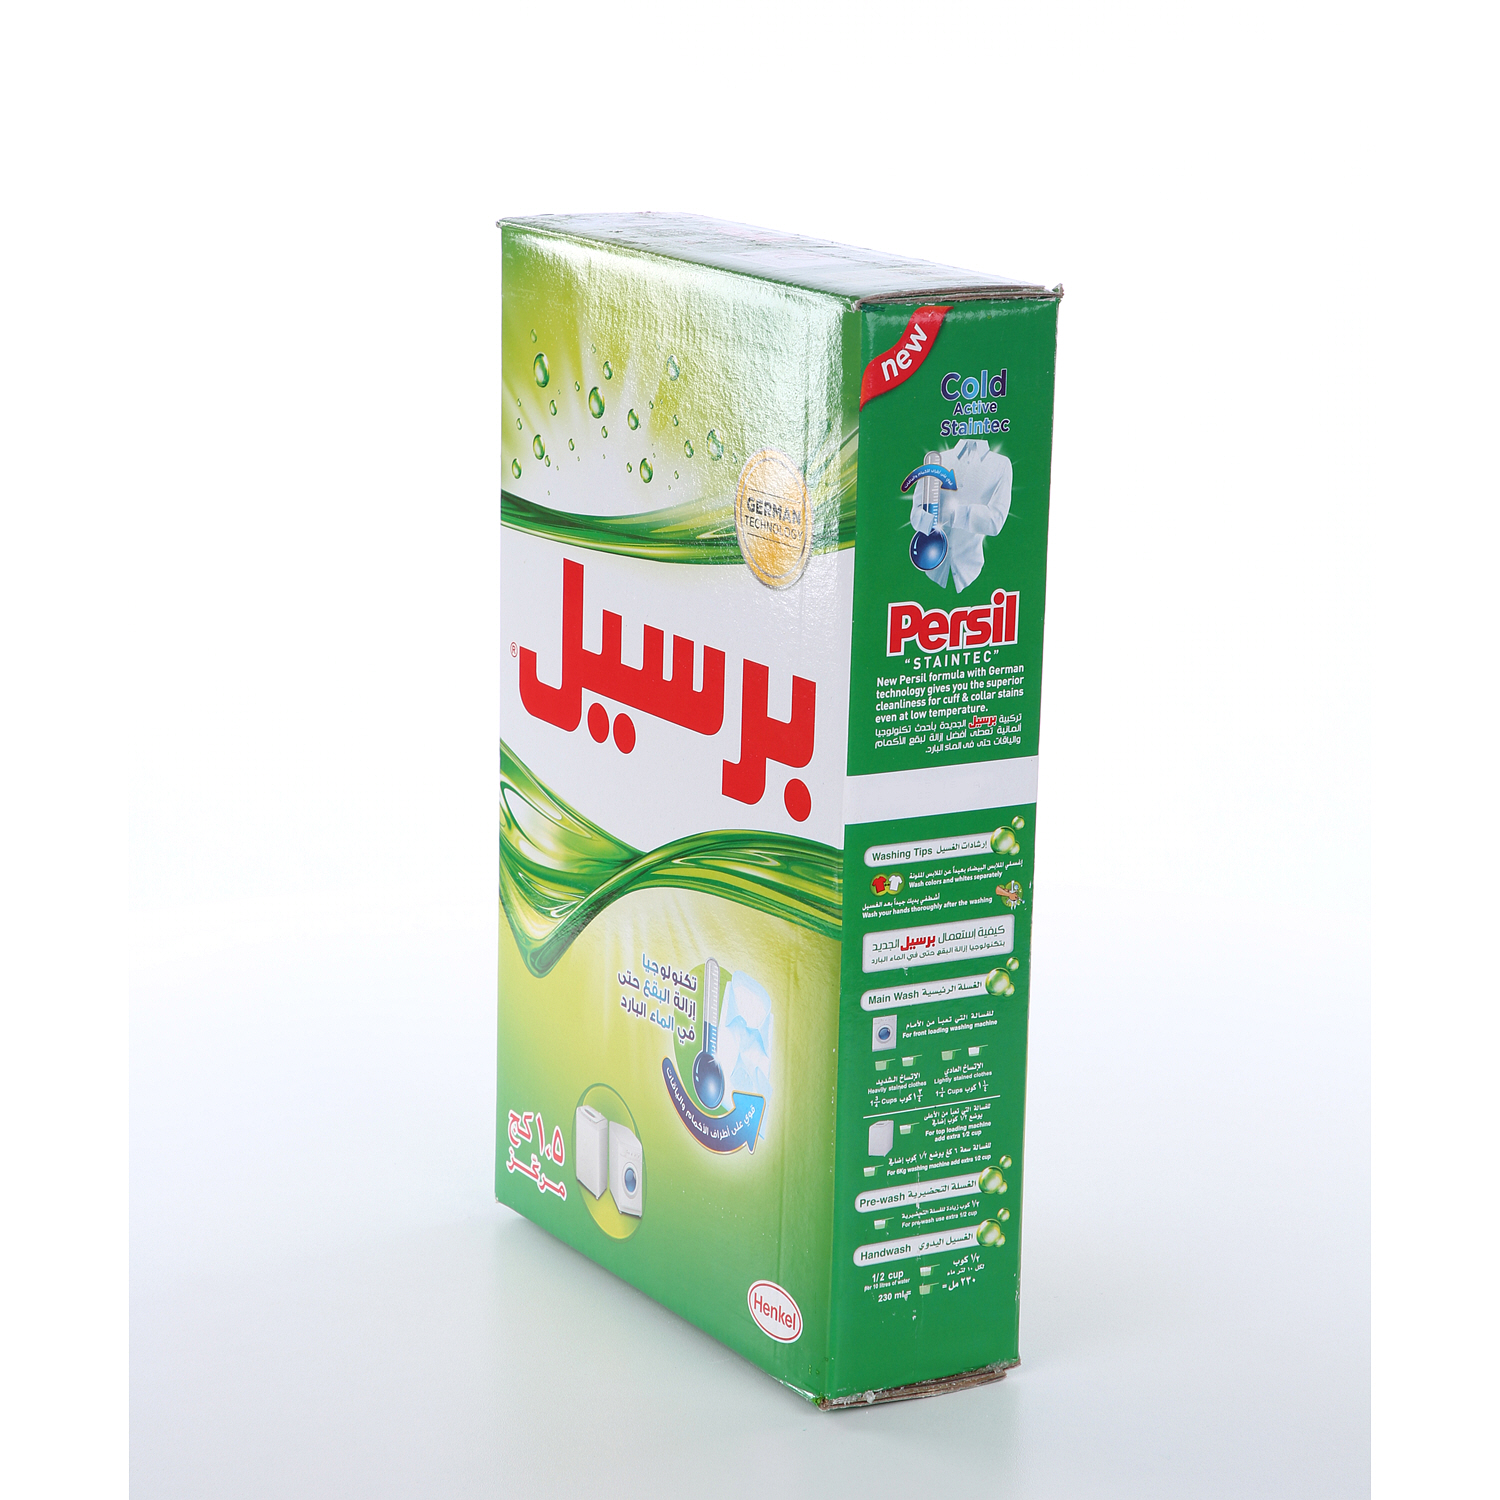 Persil Low Foam Green Box Powder 1.5 Kg